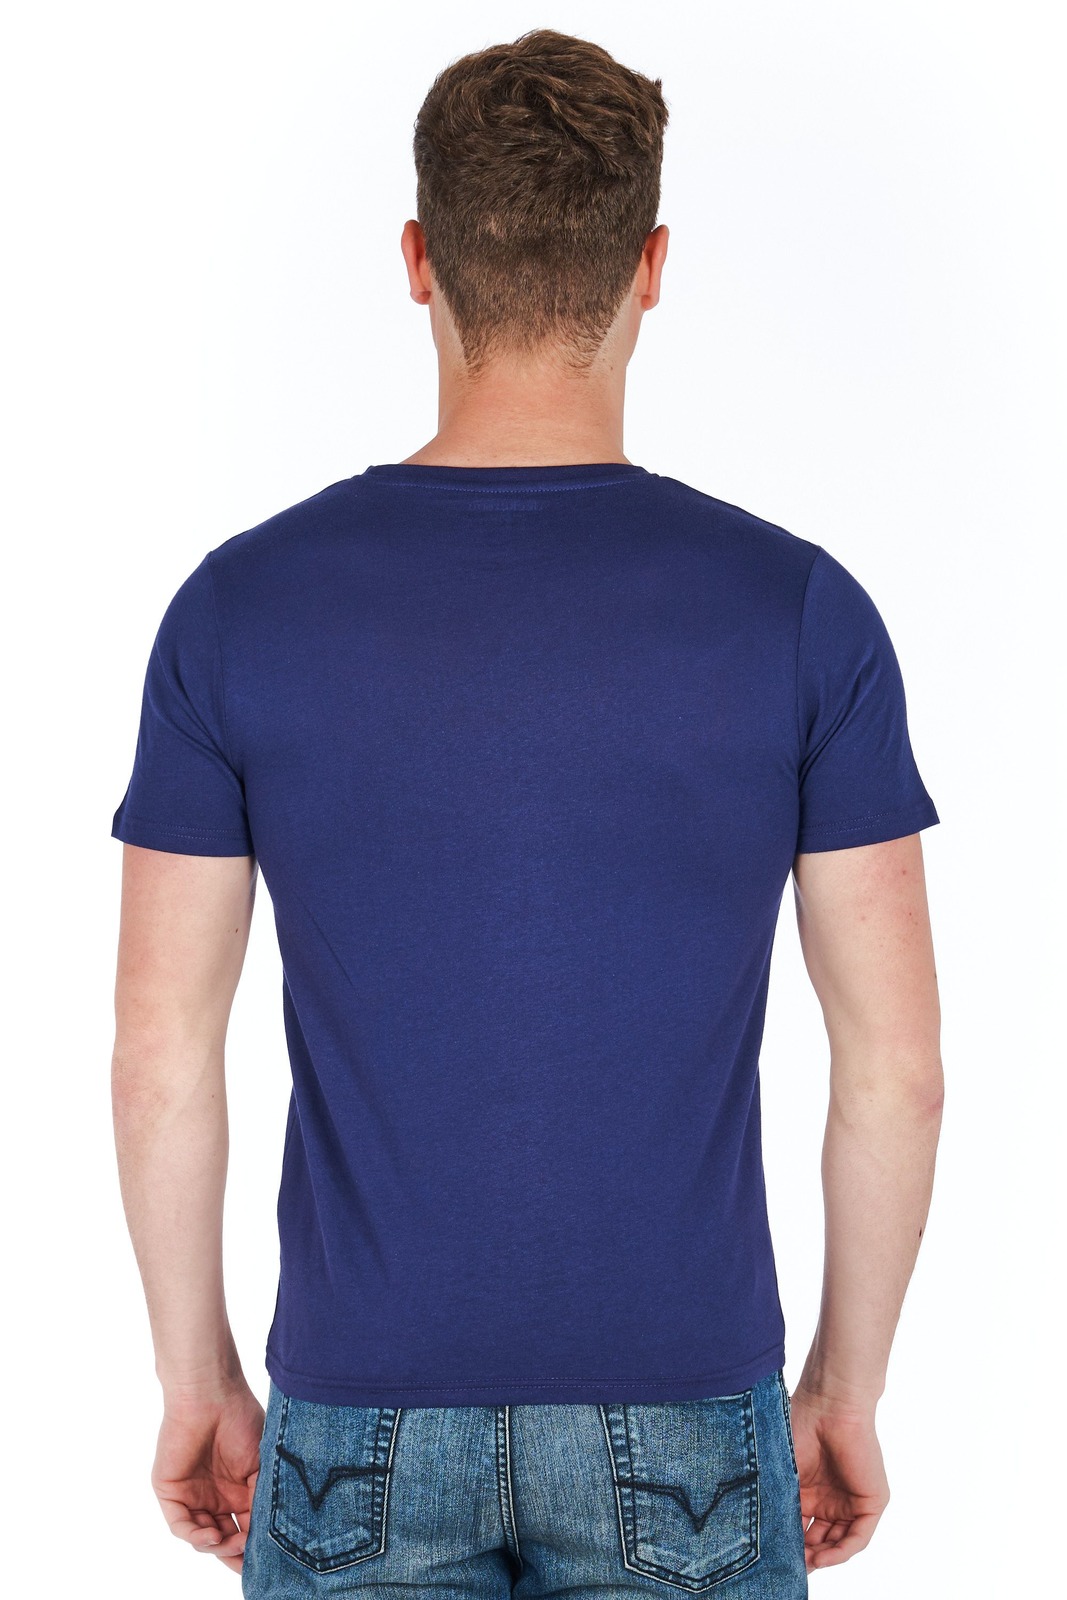 Jeckerson Blue T-shirts for Men - CLASSIC